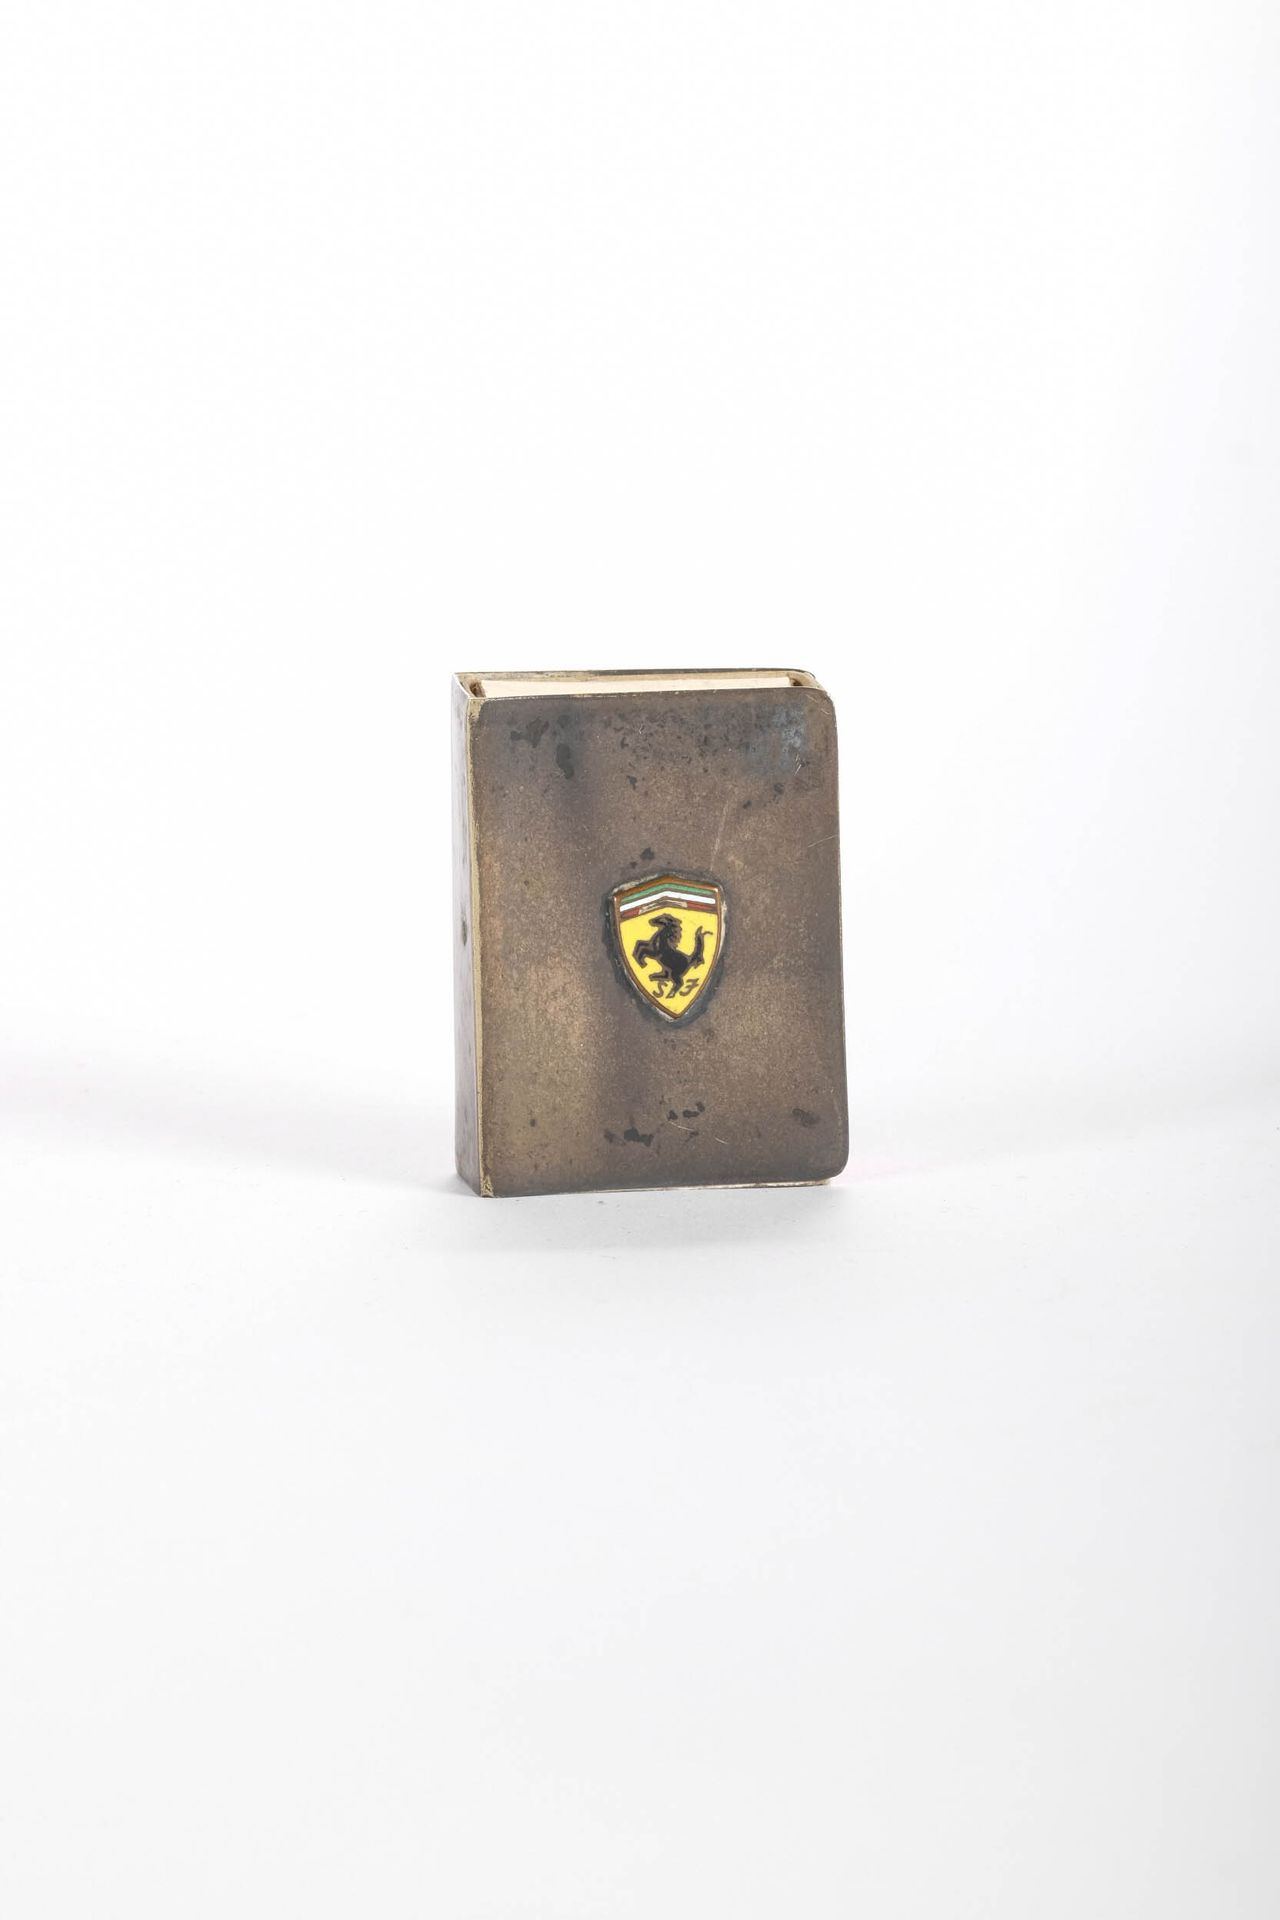 FERRARI Case of matchbox out of silver plated metal, logo Ferrari in enamel cloi&hellip;